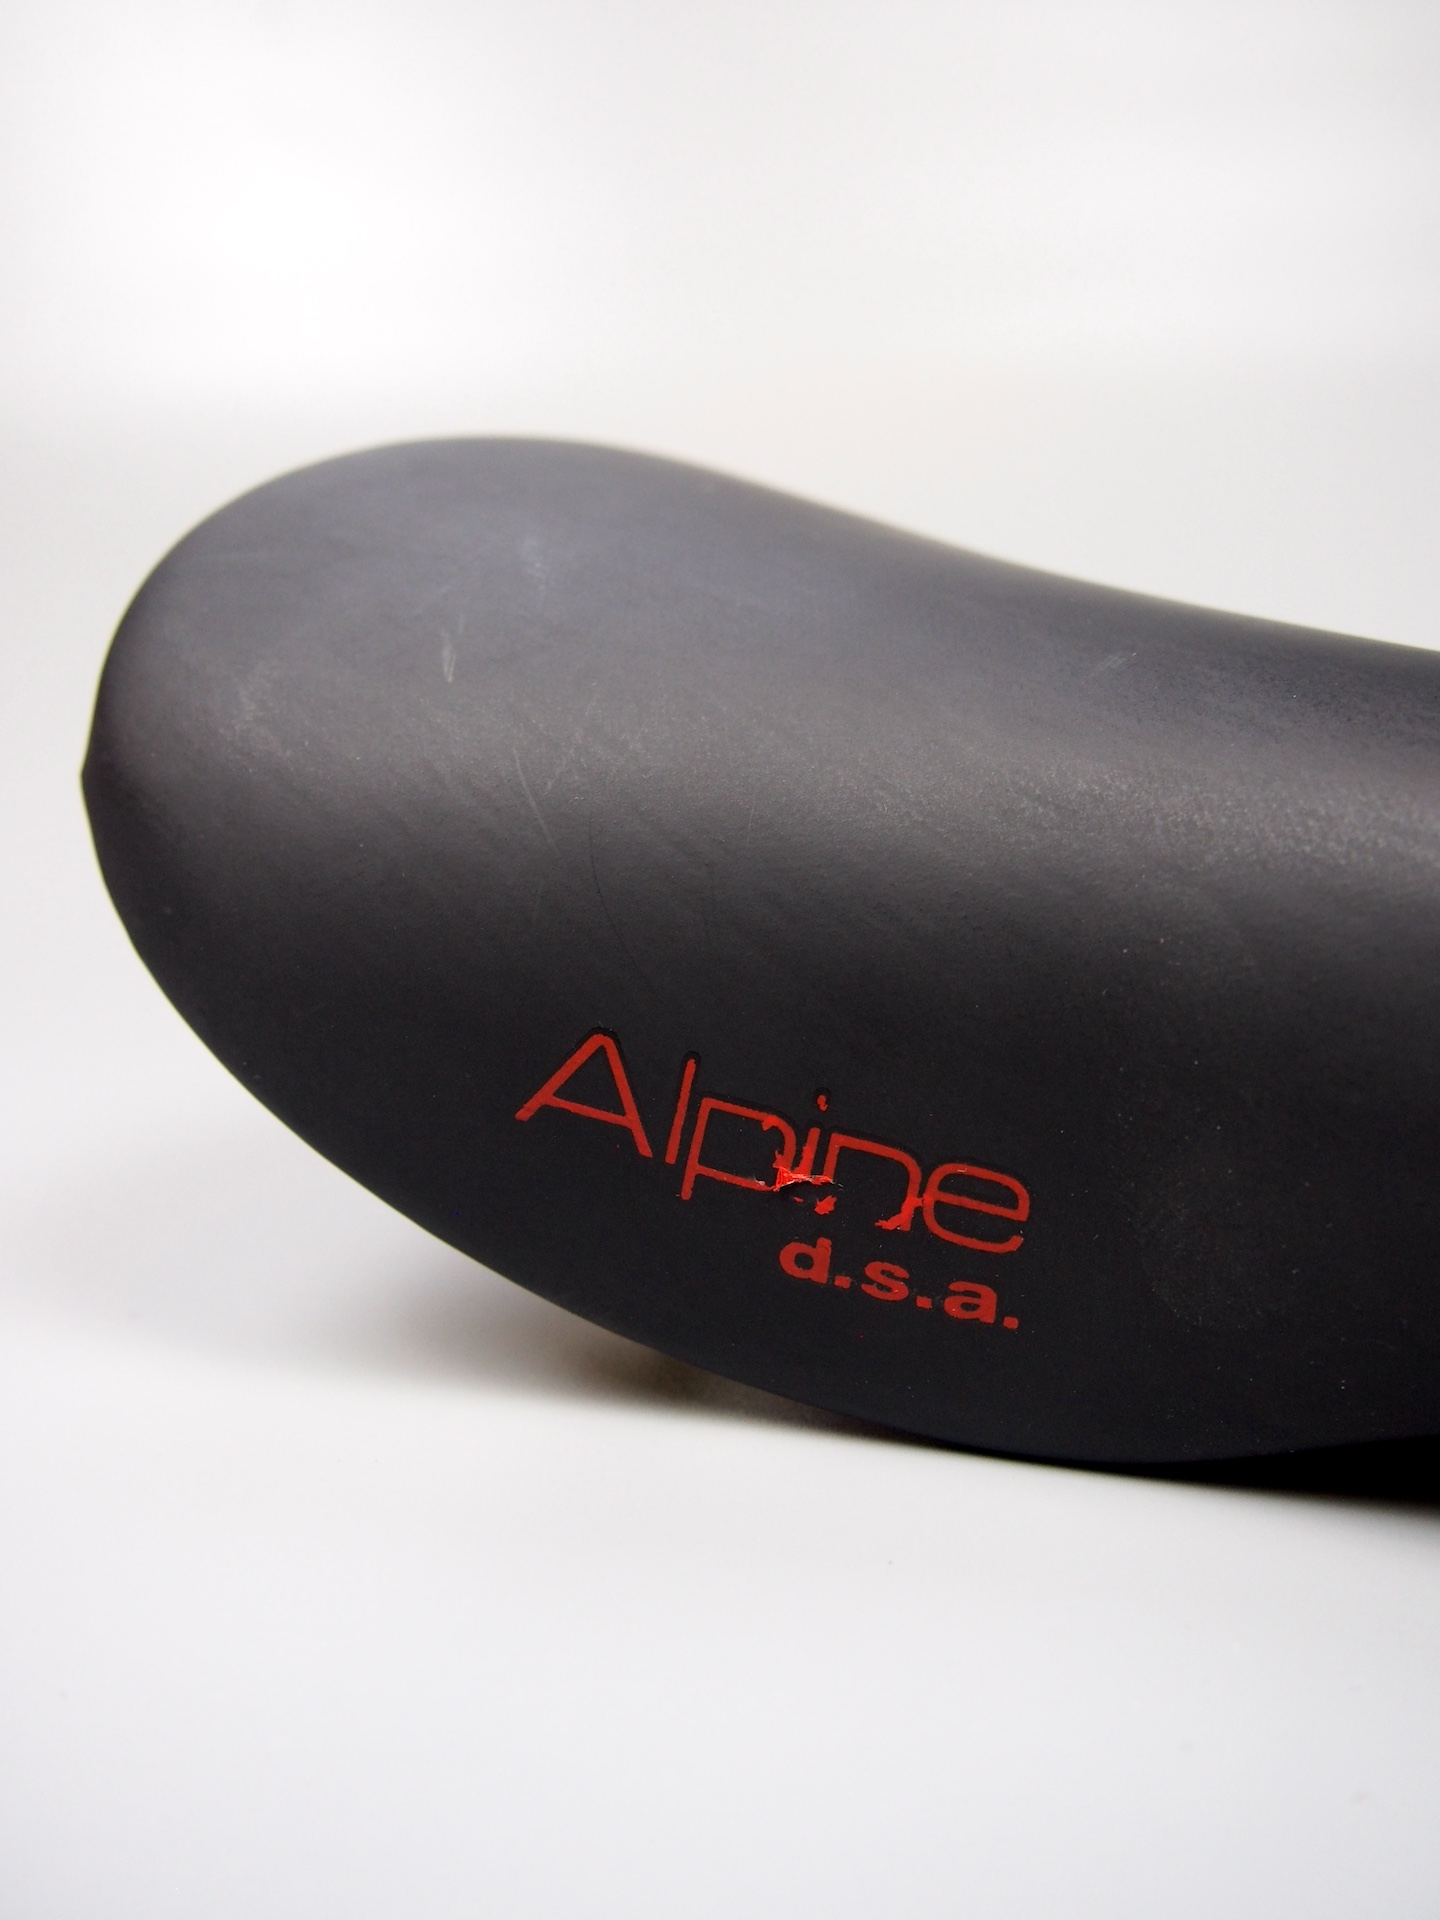 Selle Italia Alpine D.S.A saddle – Black